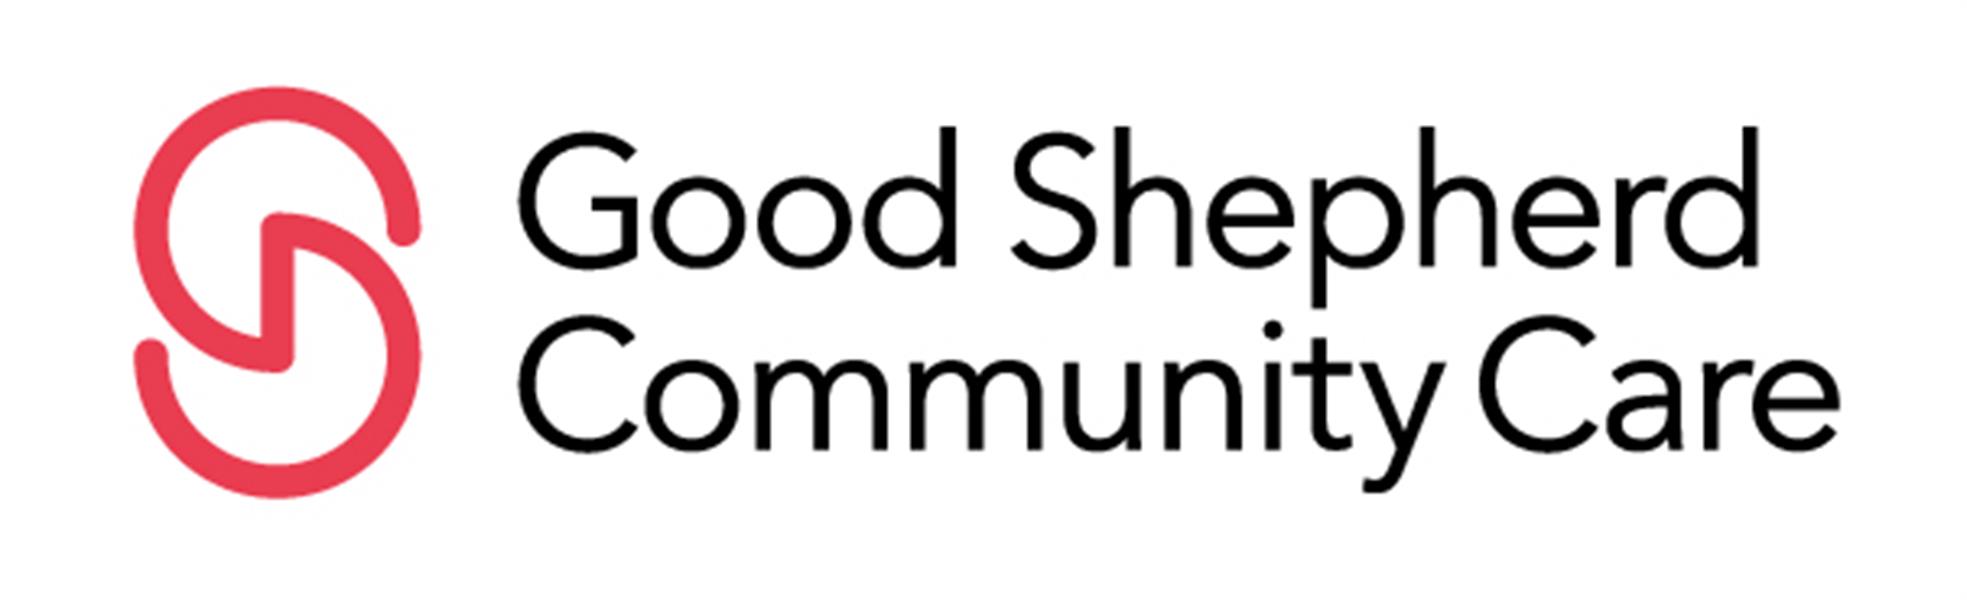 Good Shepherd Community Care | Health Care Services | Nonprofit ...